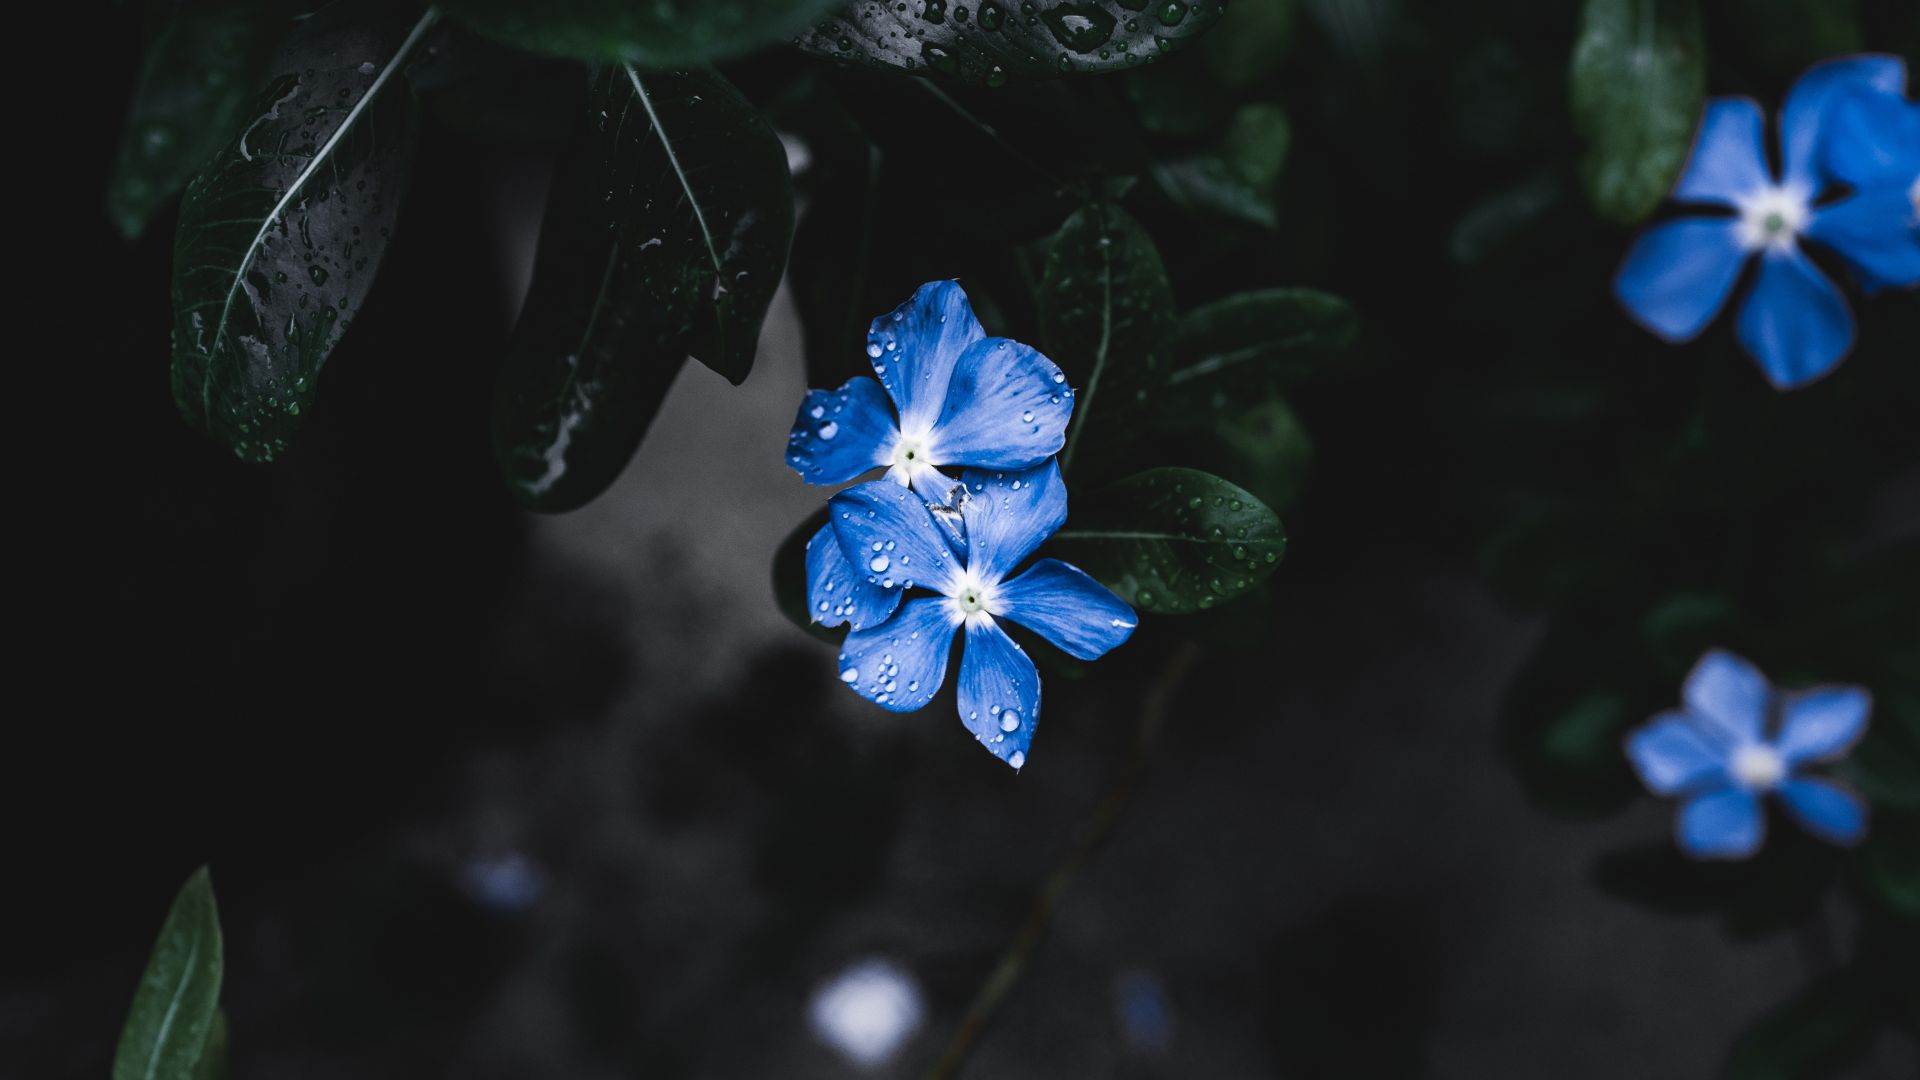 blue flower desktop wallpaper